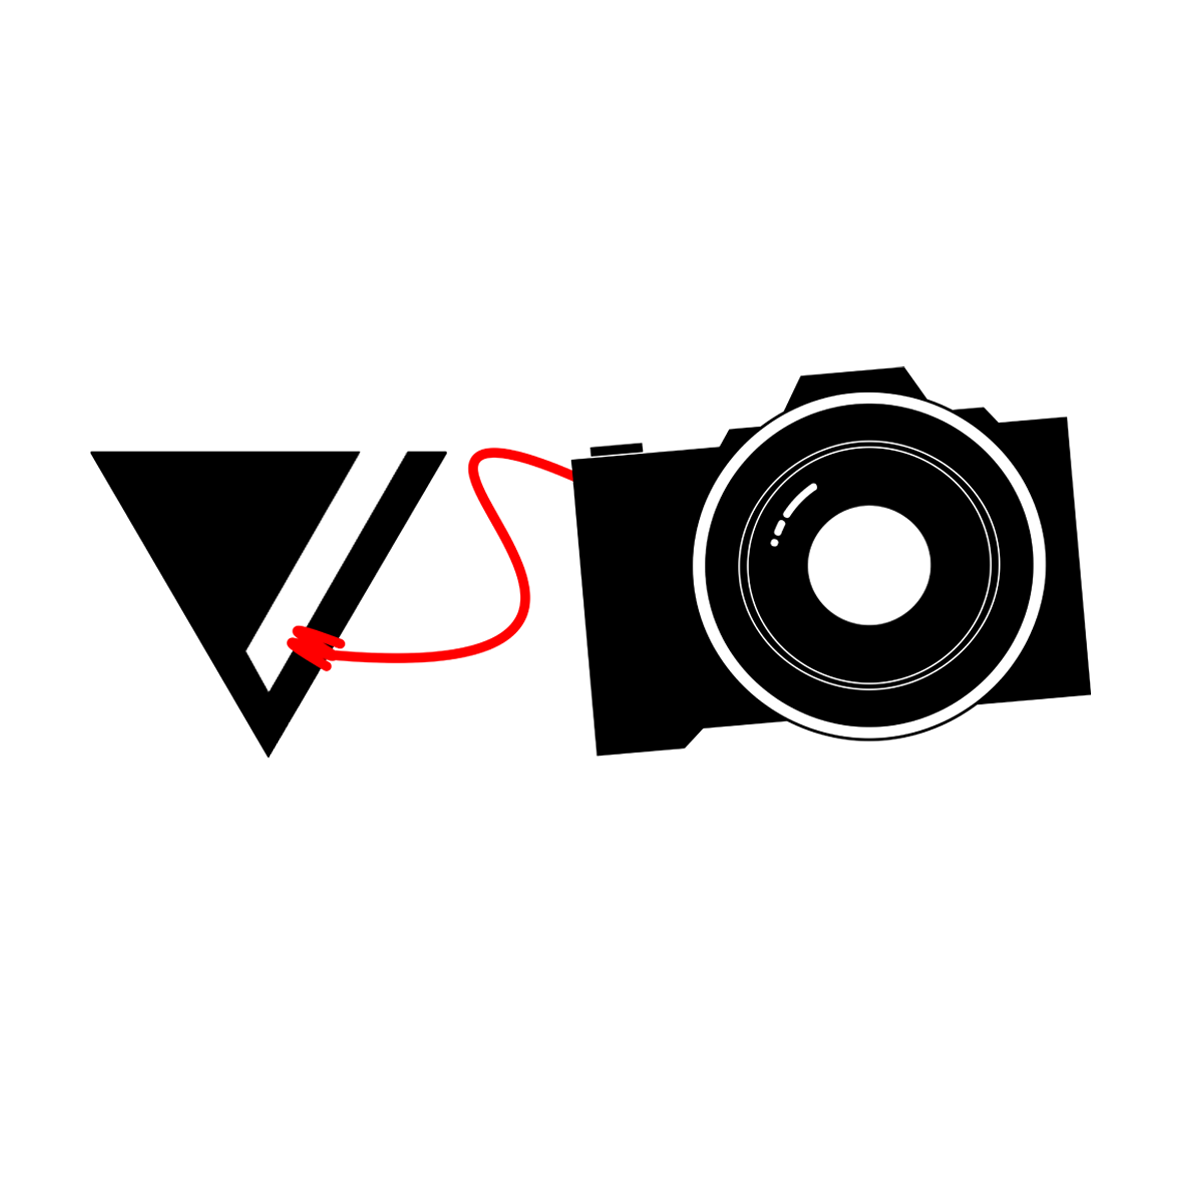 kleinVEROINSTA logos cameracords kopie 2.png